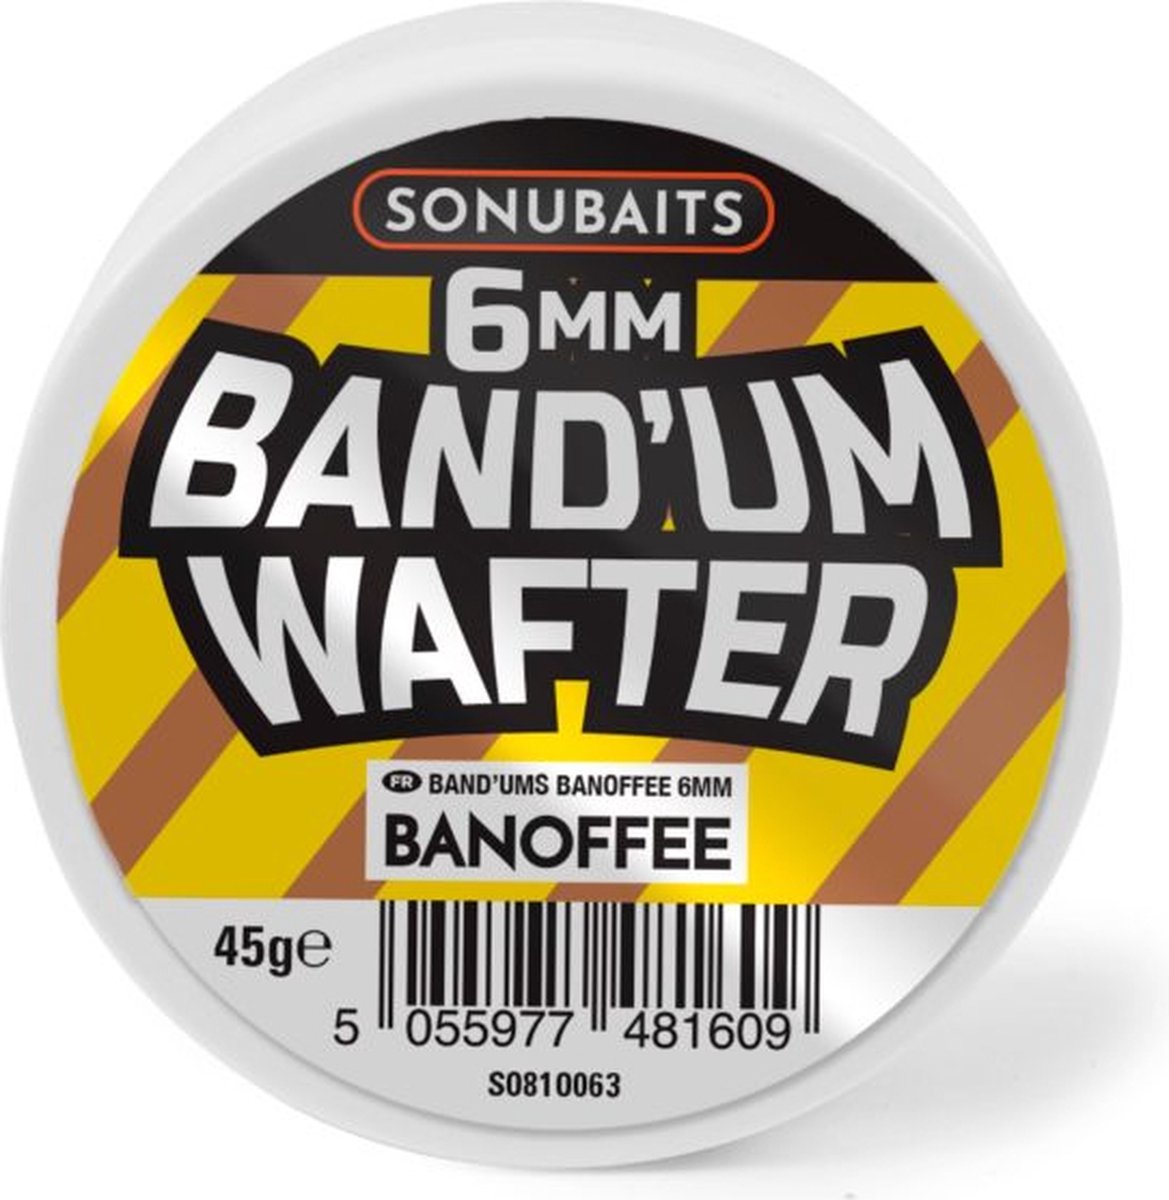 Sonubaits Bandum Wafter Banoffee 6mm | Wafters & Dumbells